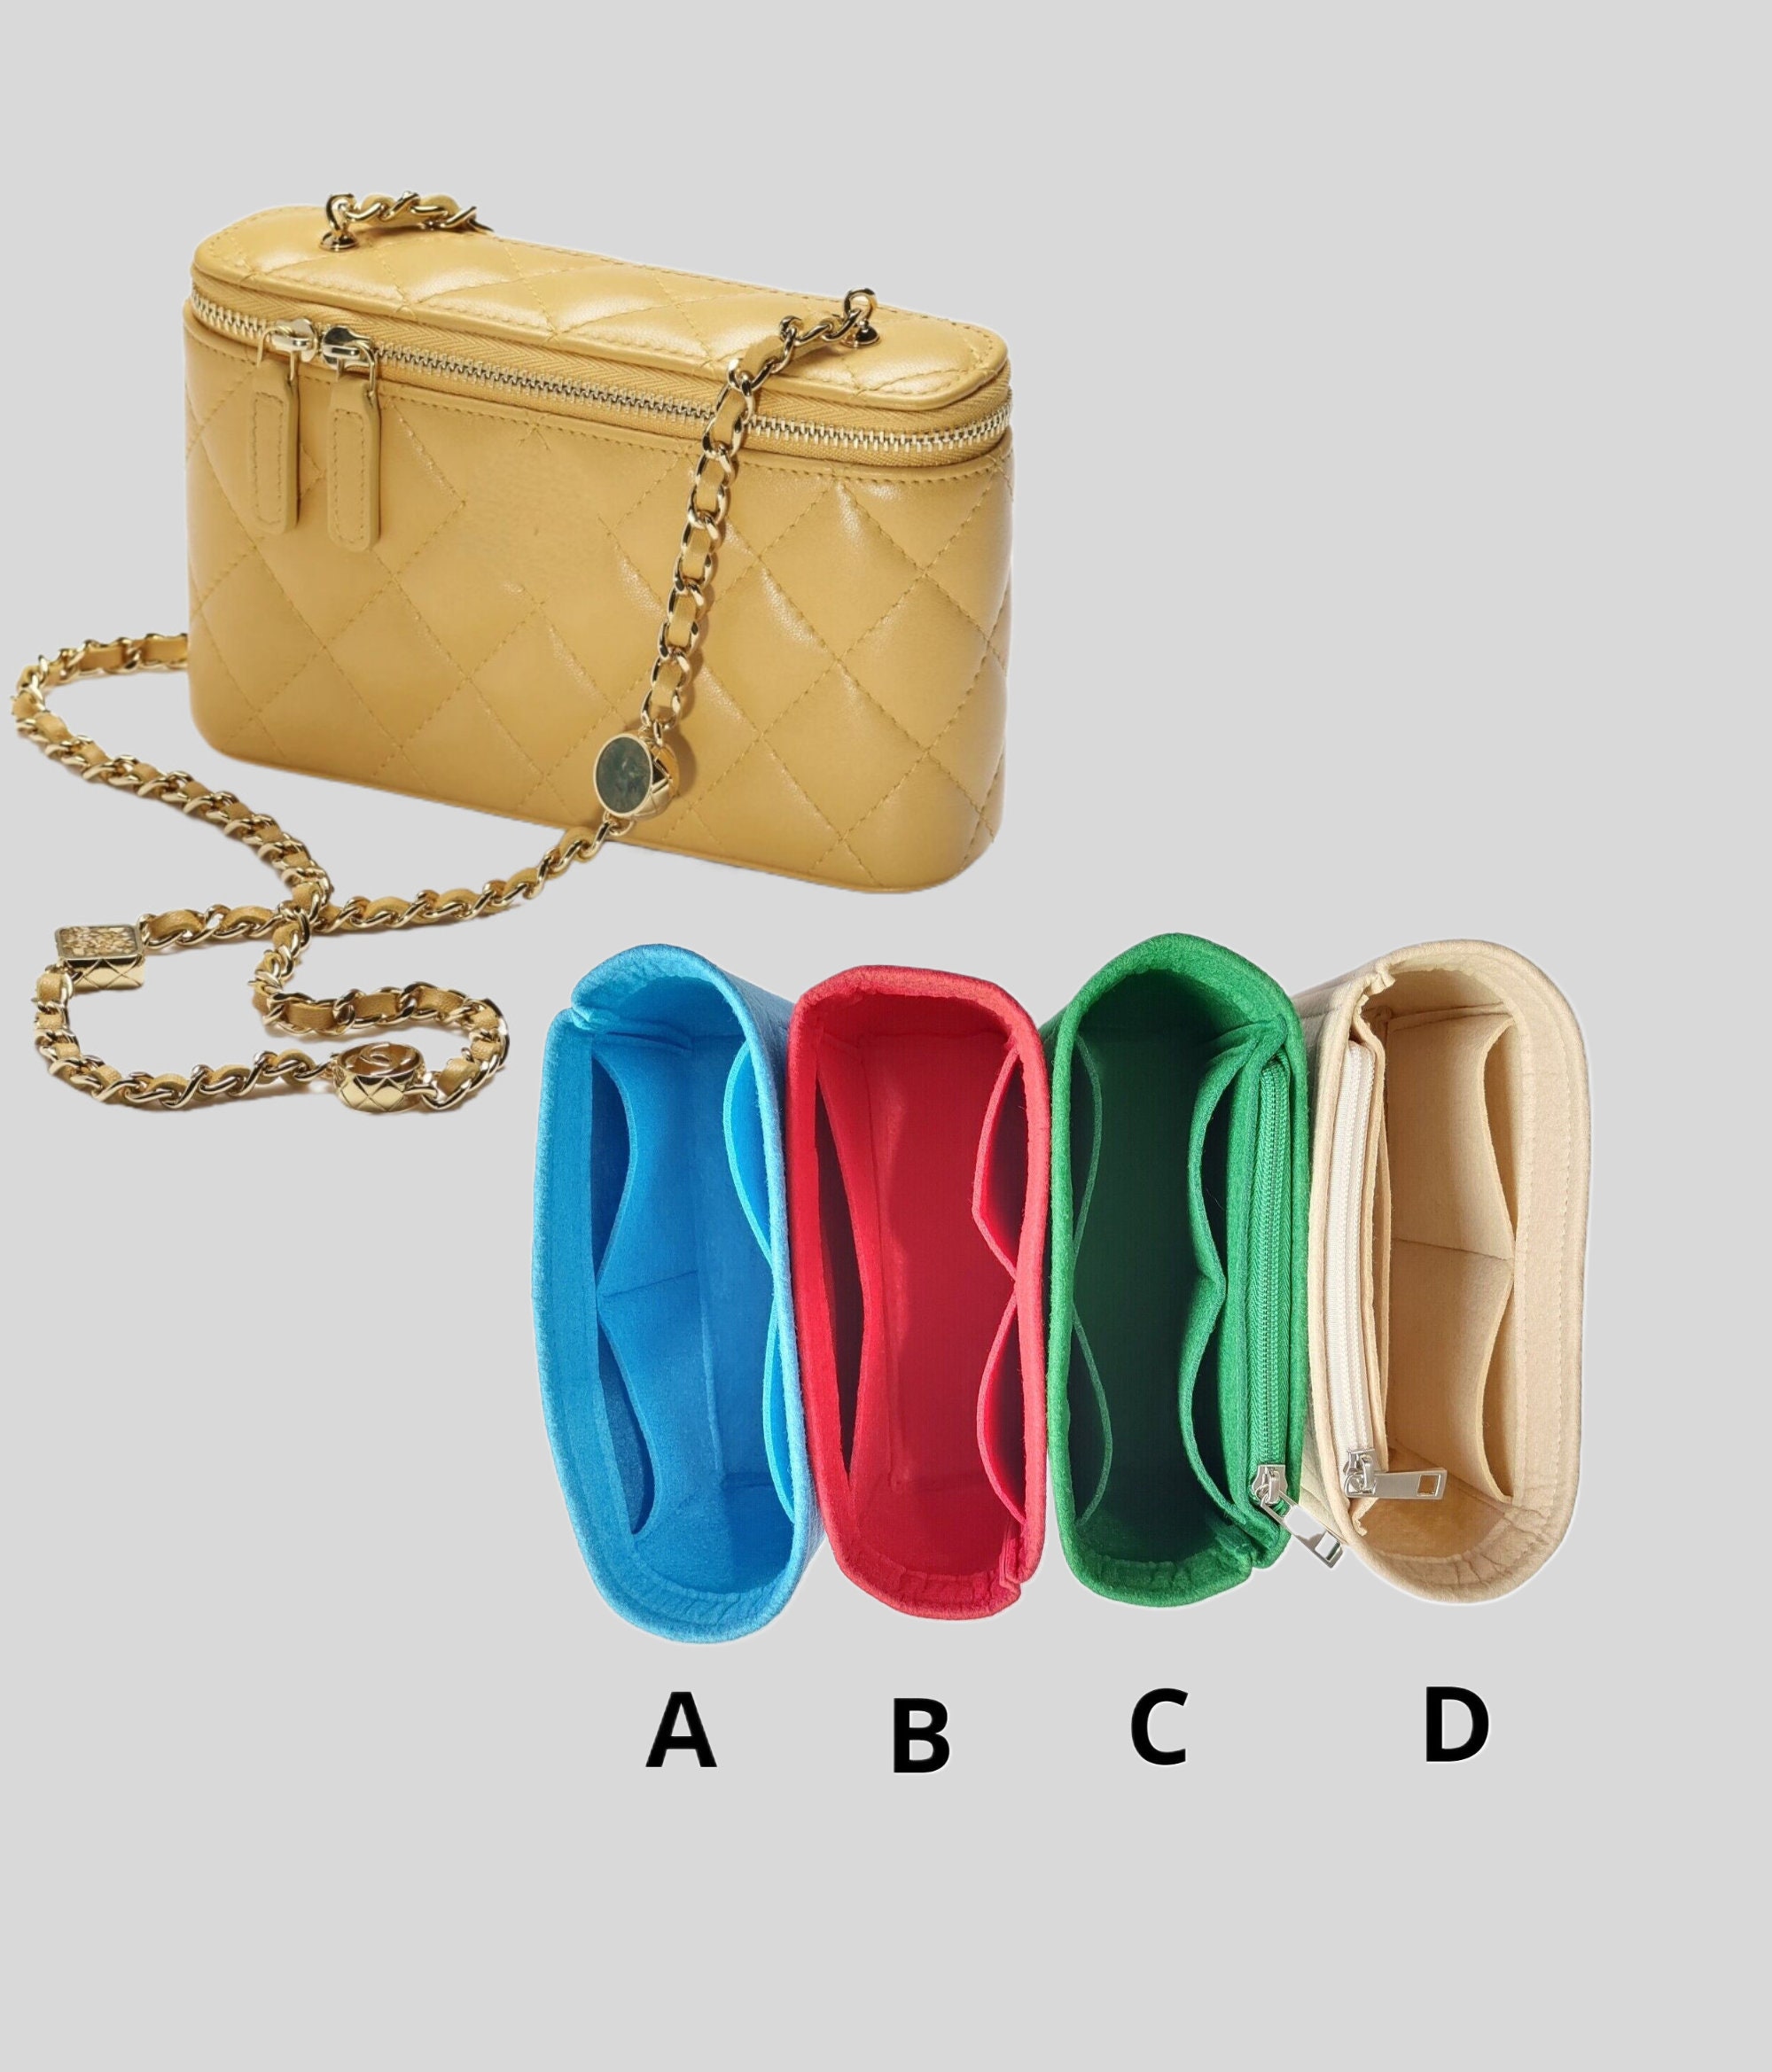 2 Styles Felt Organizer Insert for Purse Women Pouchette Wallet Conversion  Kit Mini Envelope Bag Insert Liner with D-ring Loop Rectangle Clutch Conversion  Insert Accessories Black 